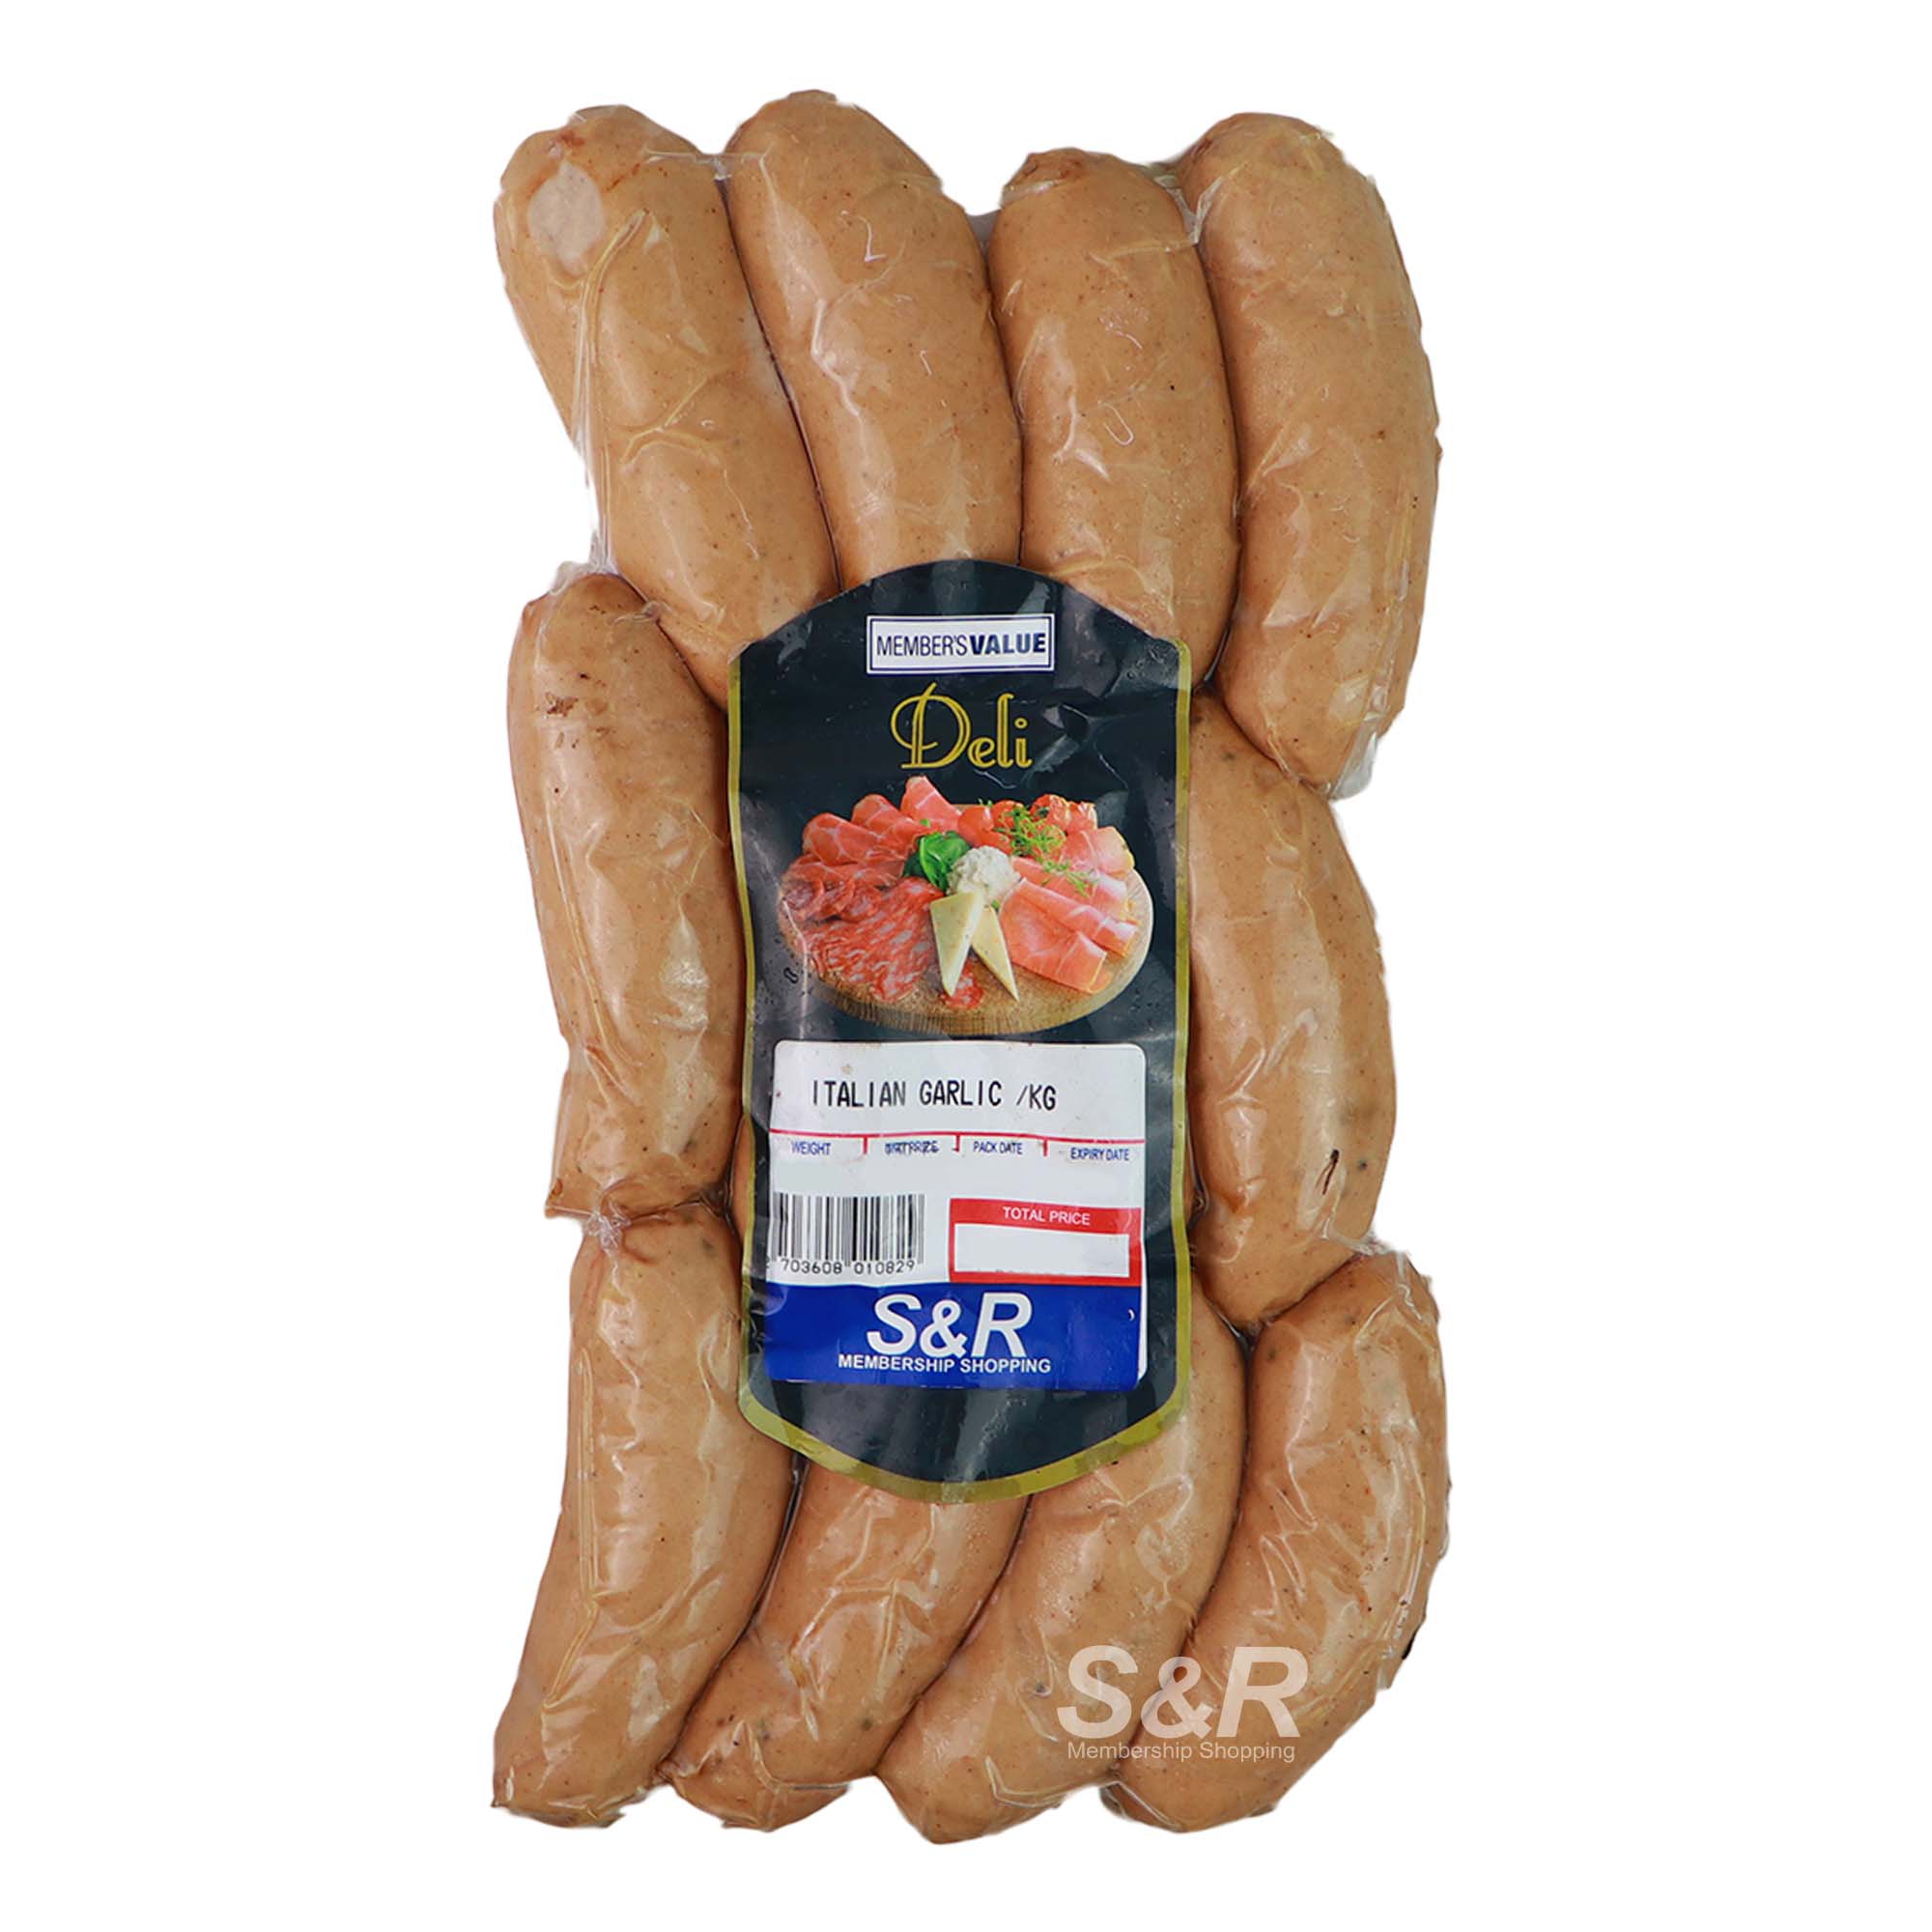 Member's Value Deli Italian Garlic Sausage approx. 1kg